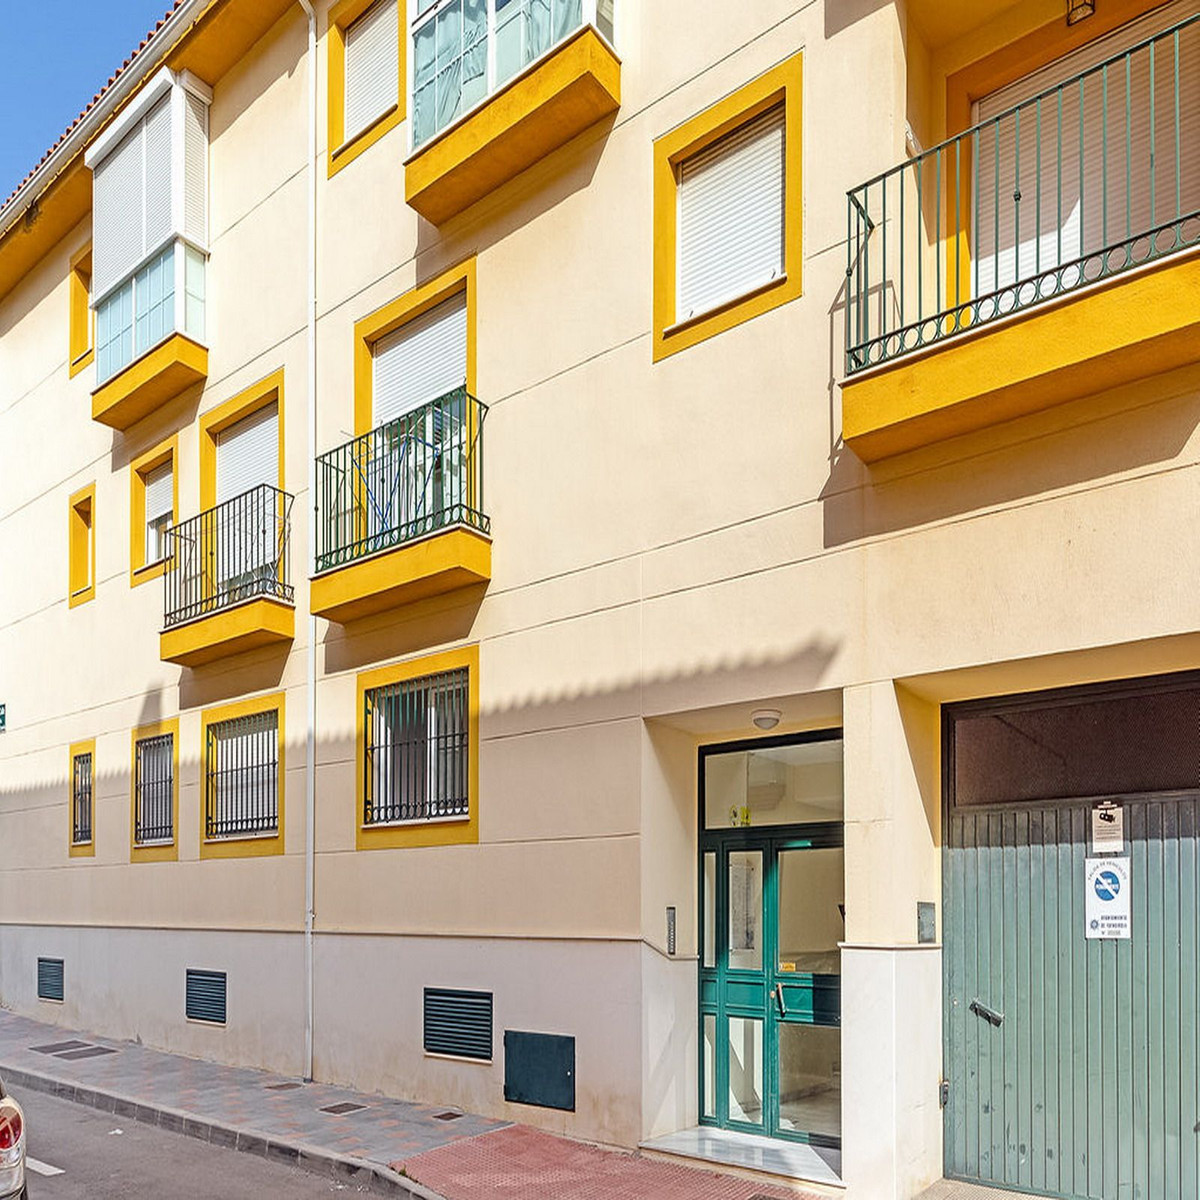 Apartment Ground Floor in Los Boliches, Costa del Sol
